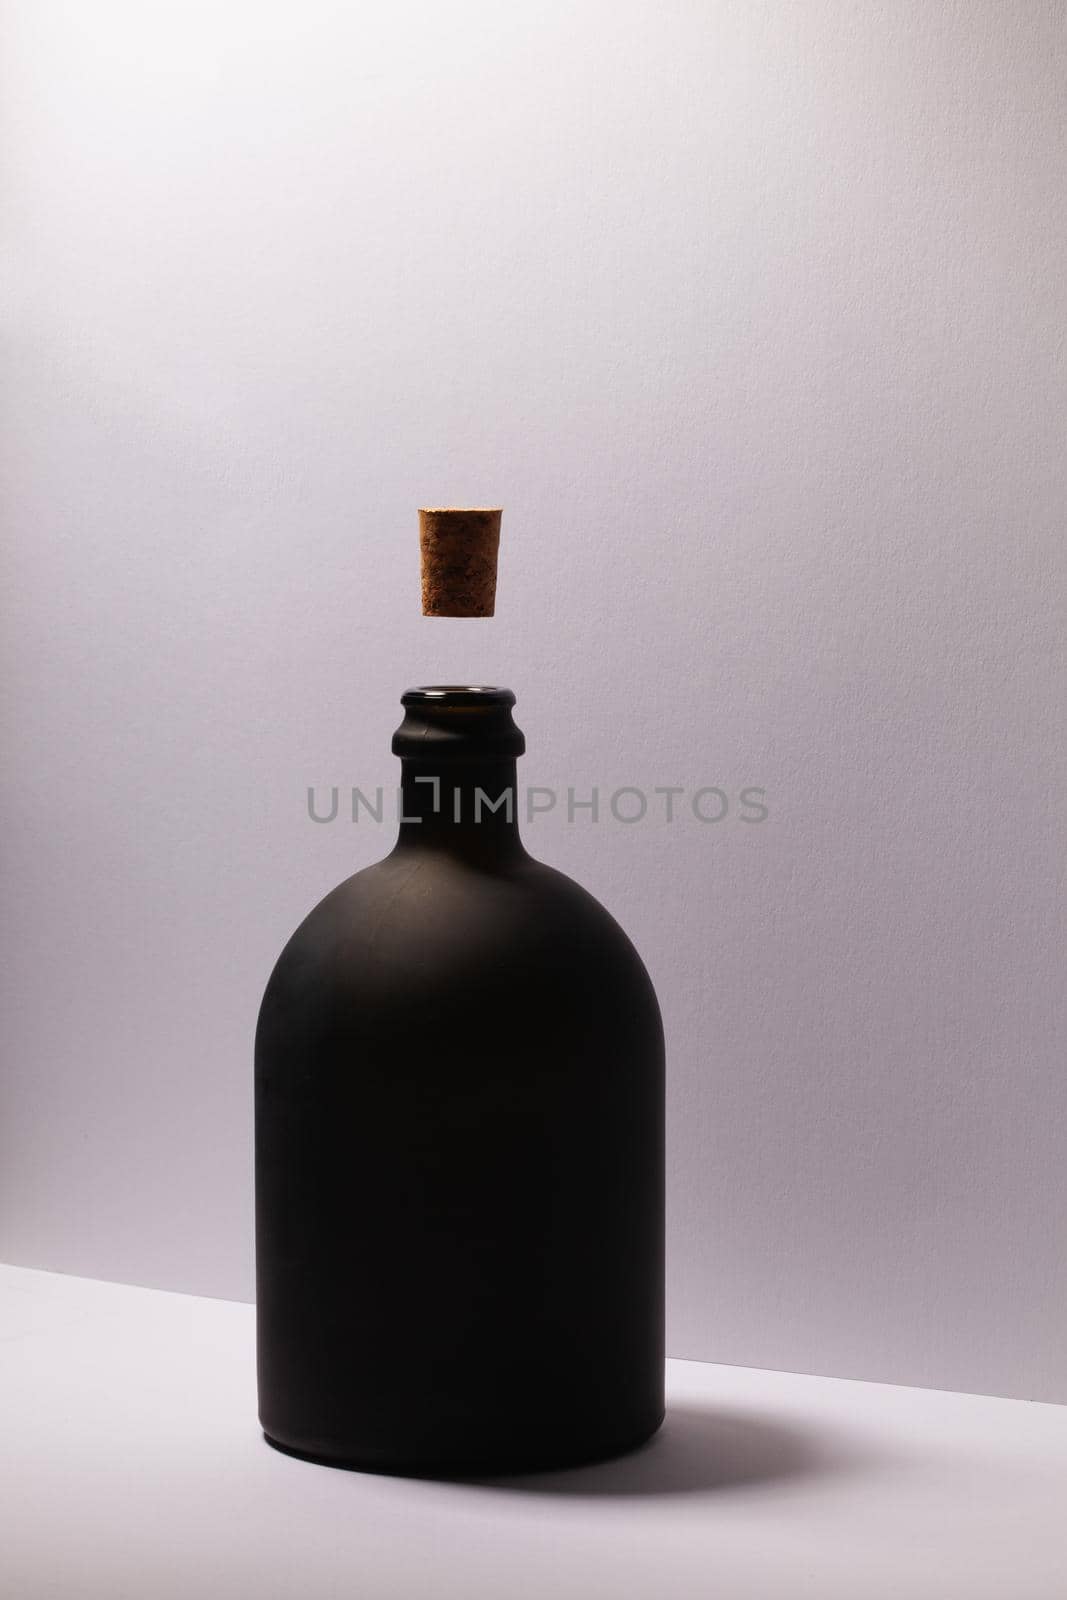 Luxury Black Glass of Rum on the white background. Levitating cork stopper.